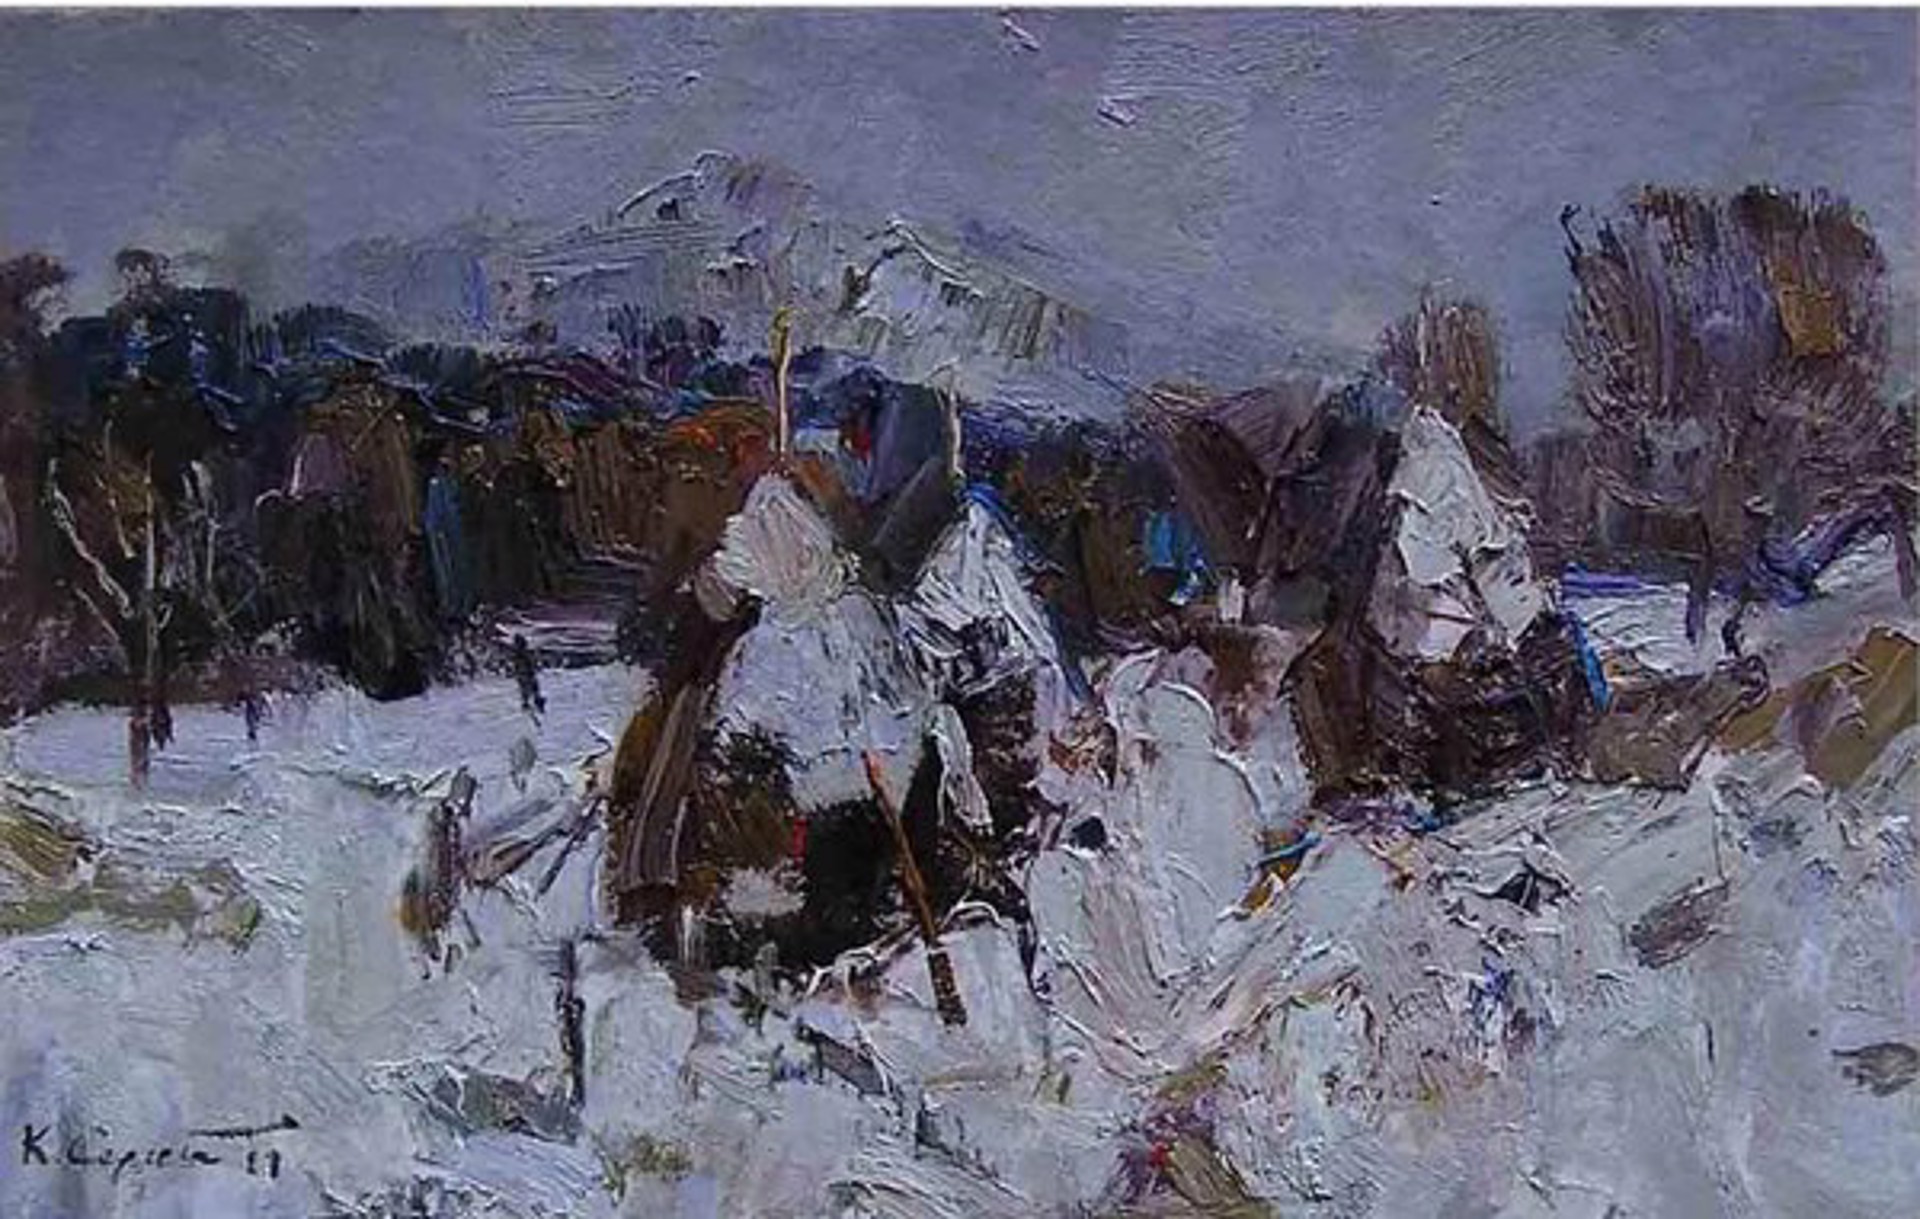 Haystacks In The Snow by Sergei Kovalenko